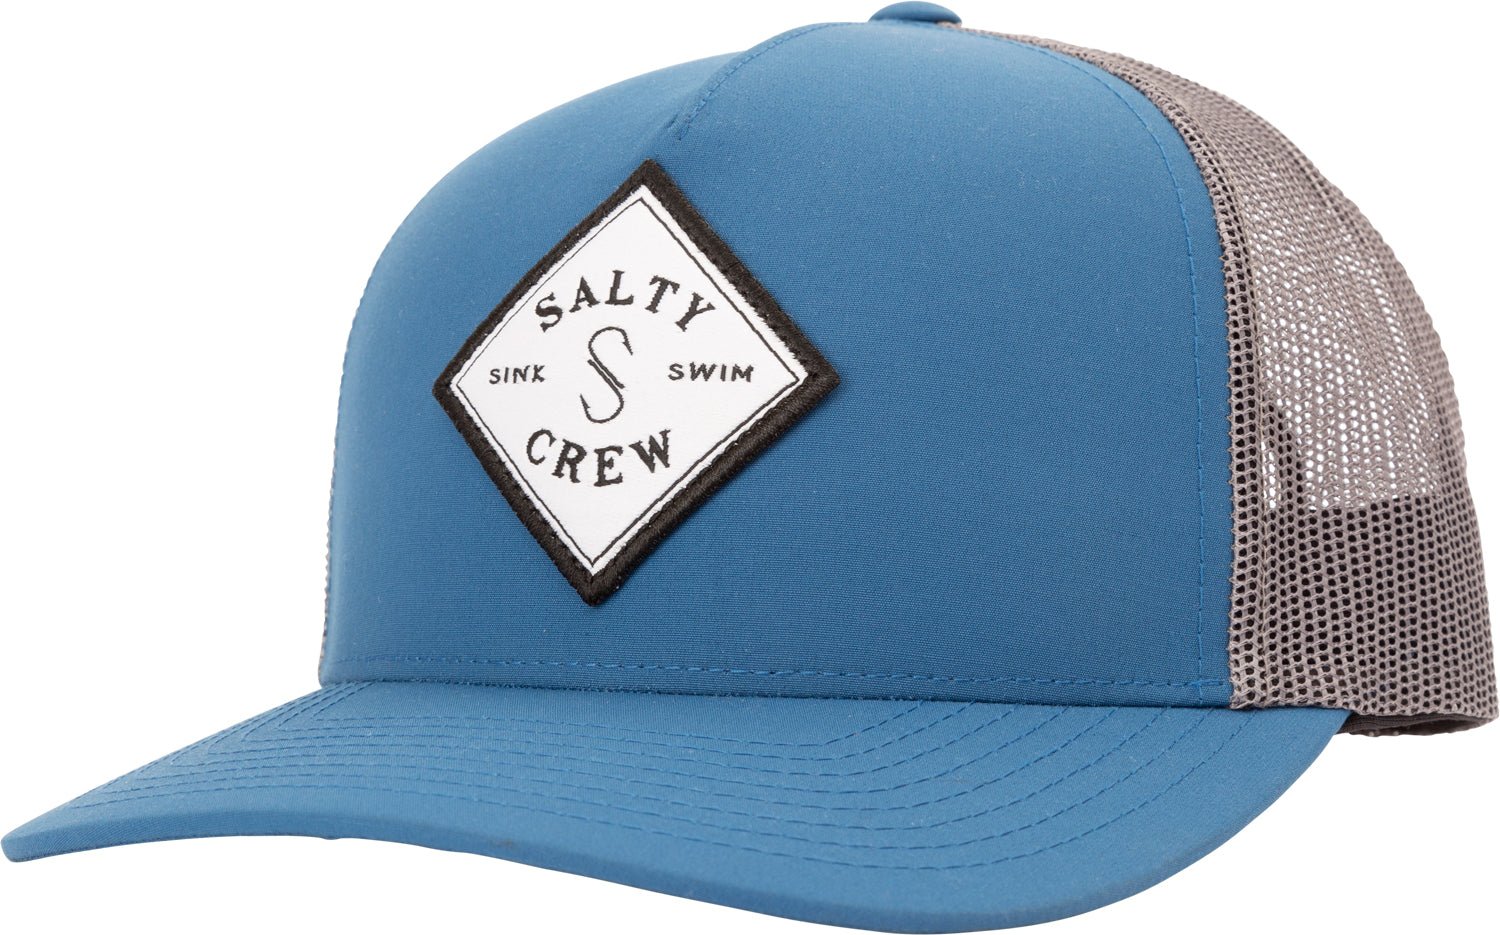 Salty Crew Sealine Trucker Hat